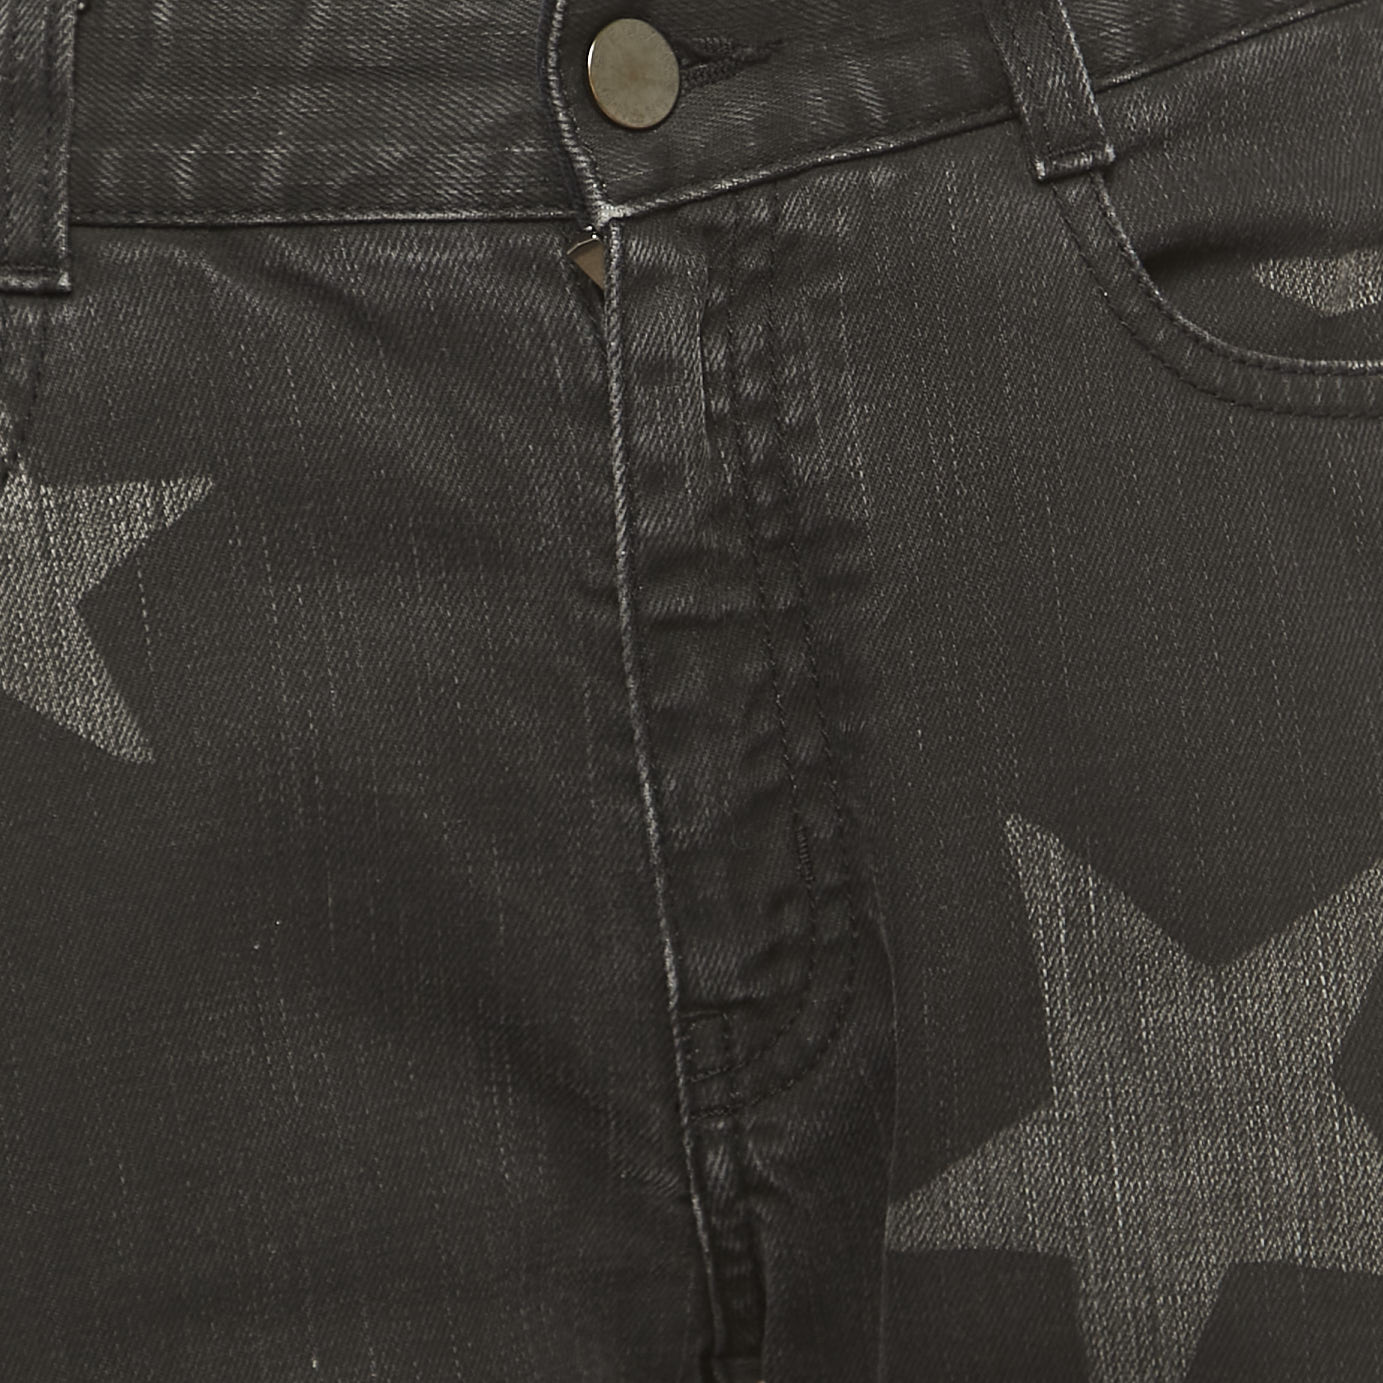 Stella McCartney Black Washed Stars Print Denim Jeans S Waist 26